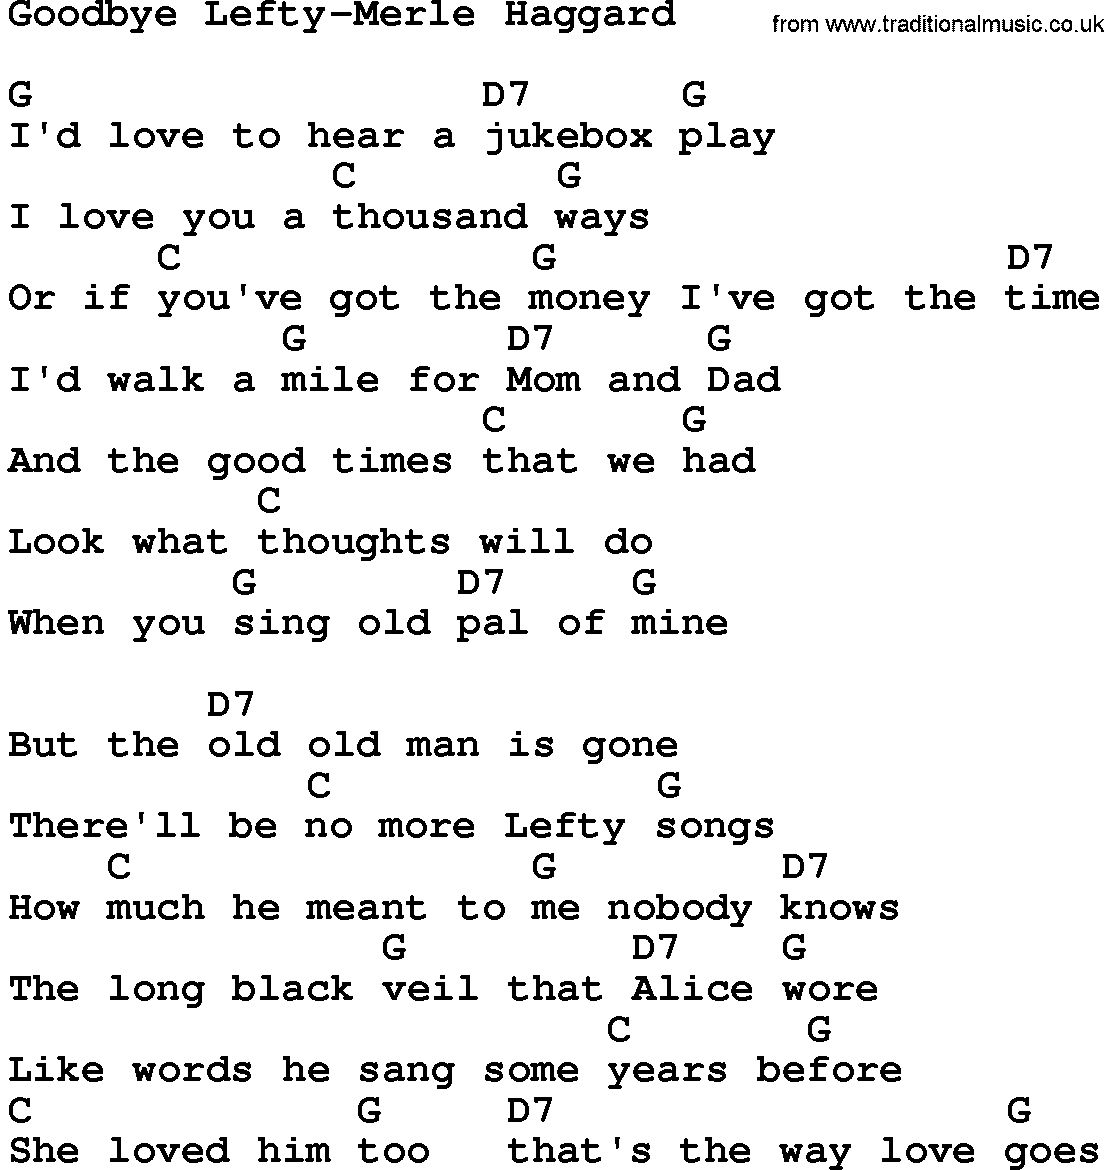 Country music song: Goodbye Lefty-Merle Haggard lyrics and chords